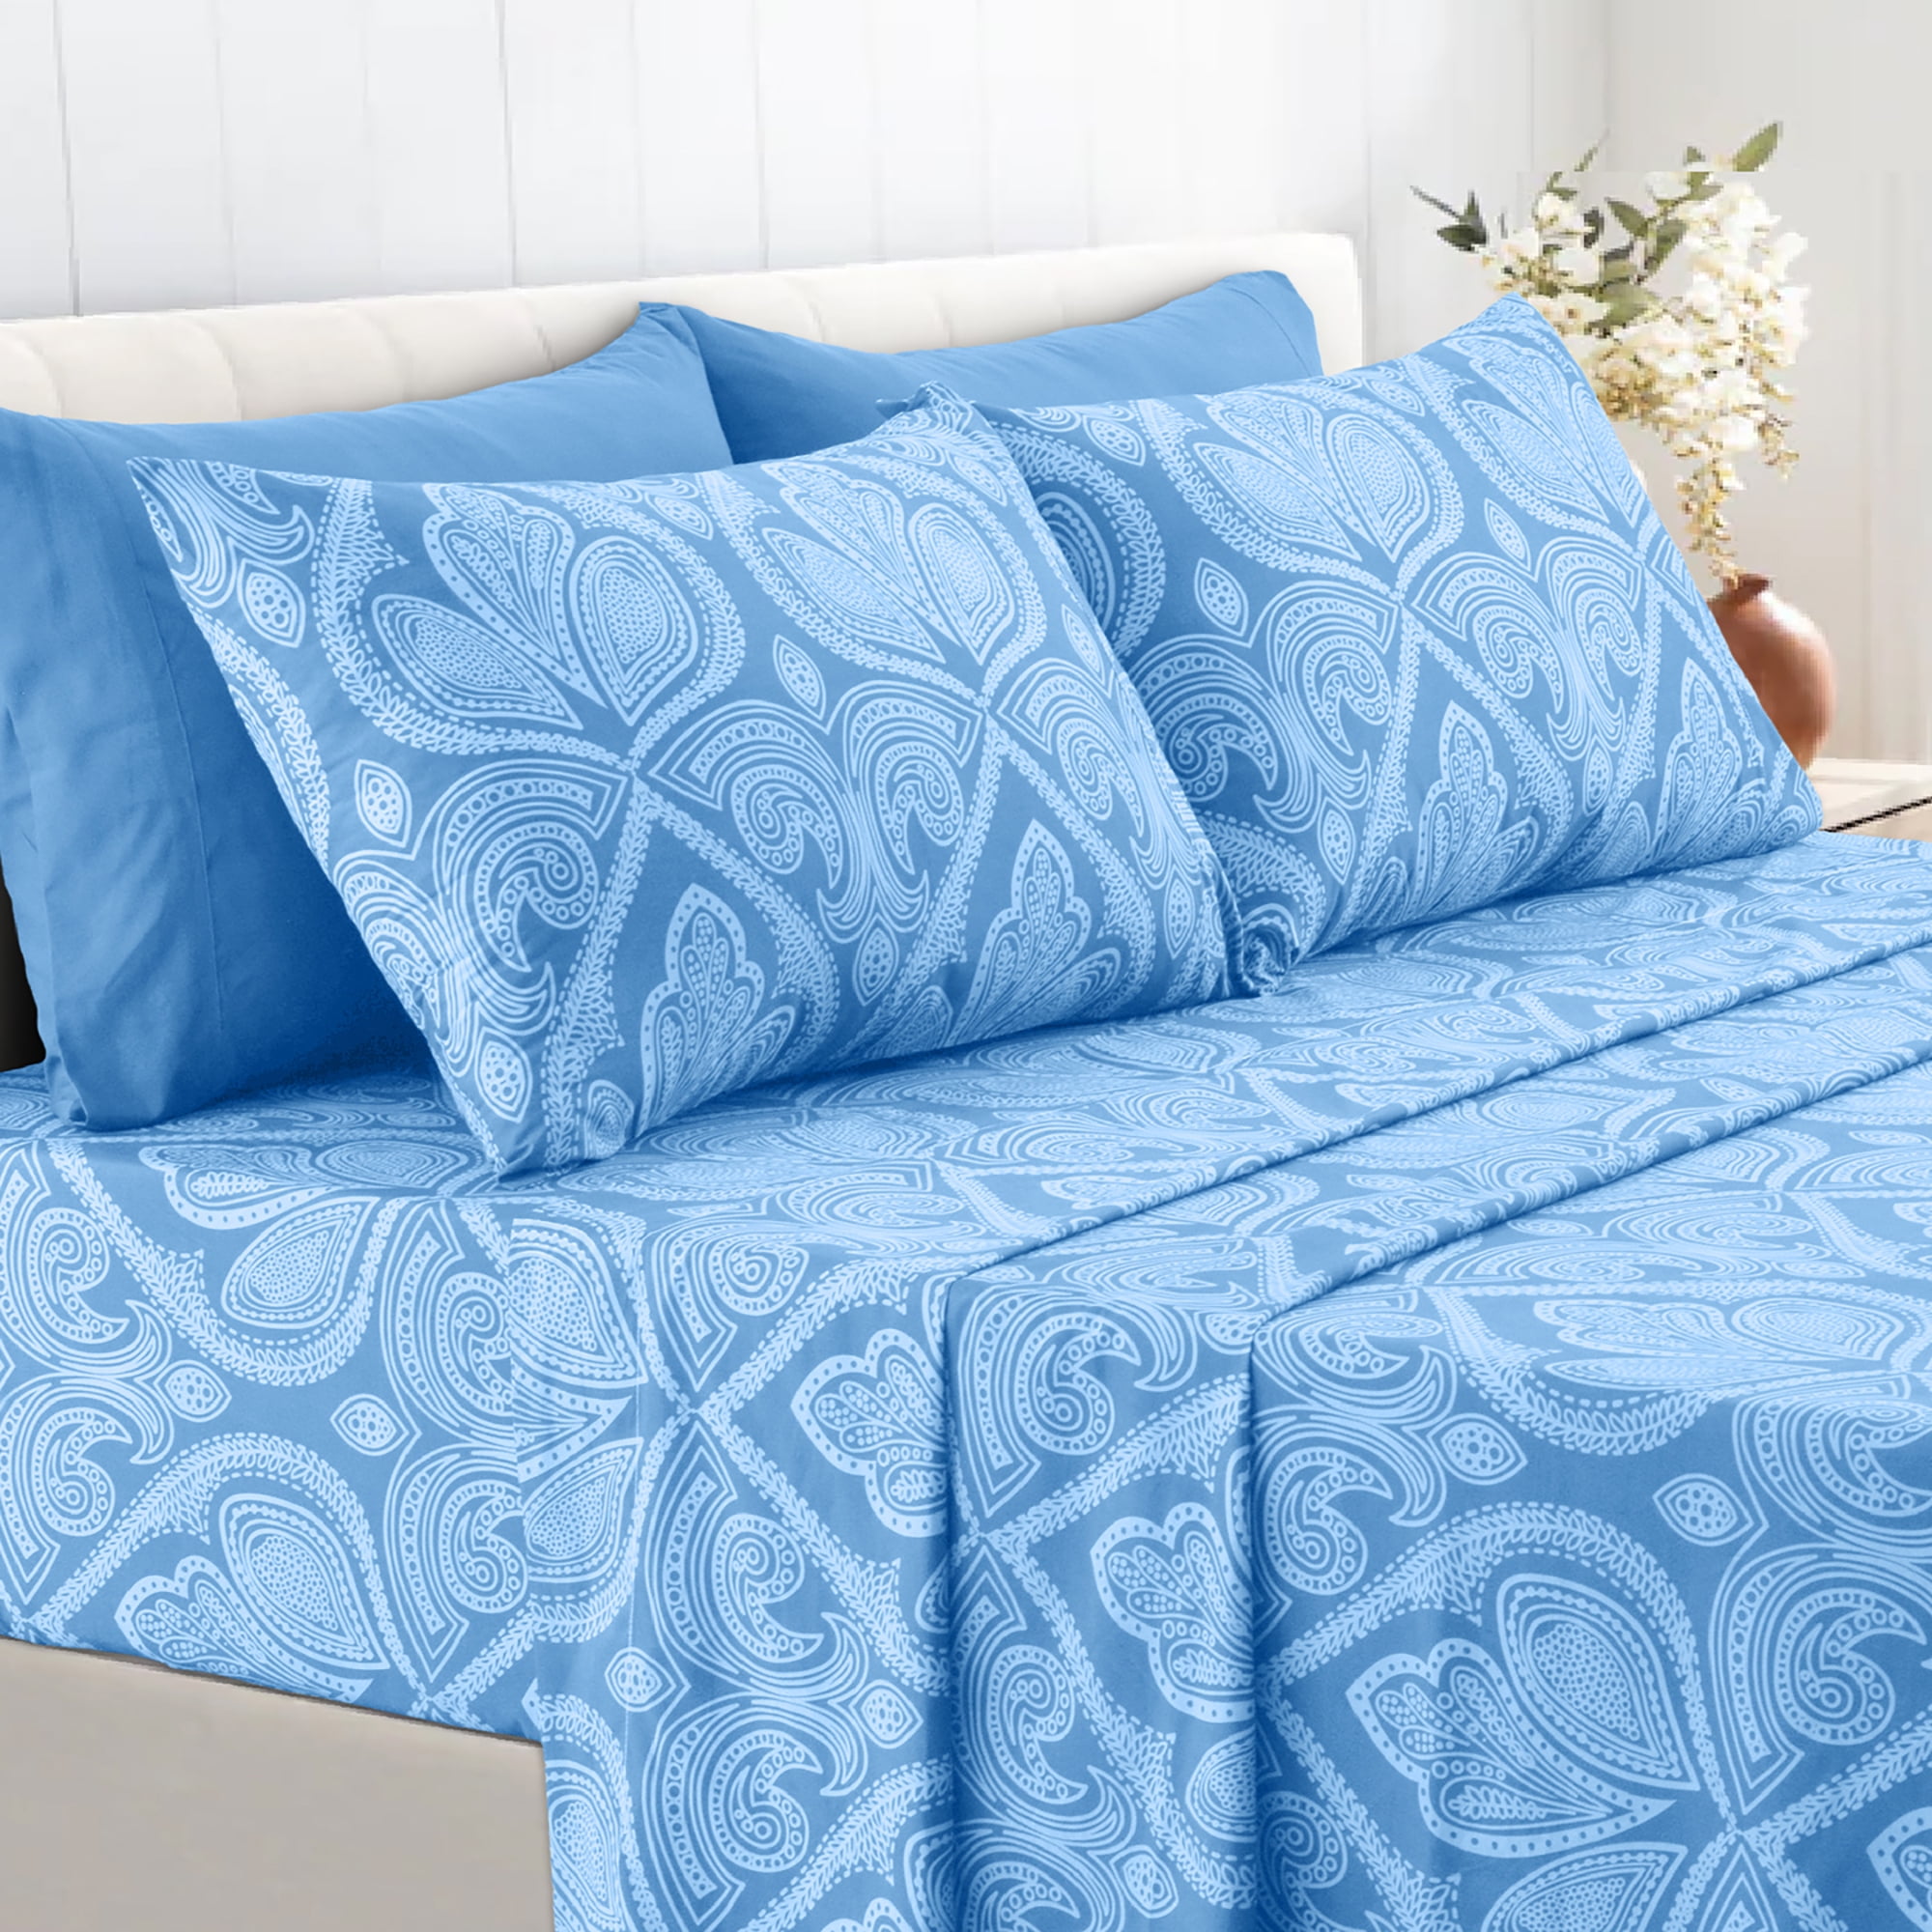 Details about   Cozy Bedding Sheet Set OR Duvet Set Egyptian Cotton US Full XL Size Solid Colors 